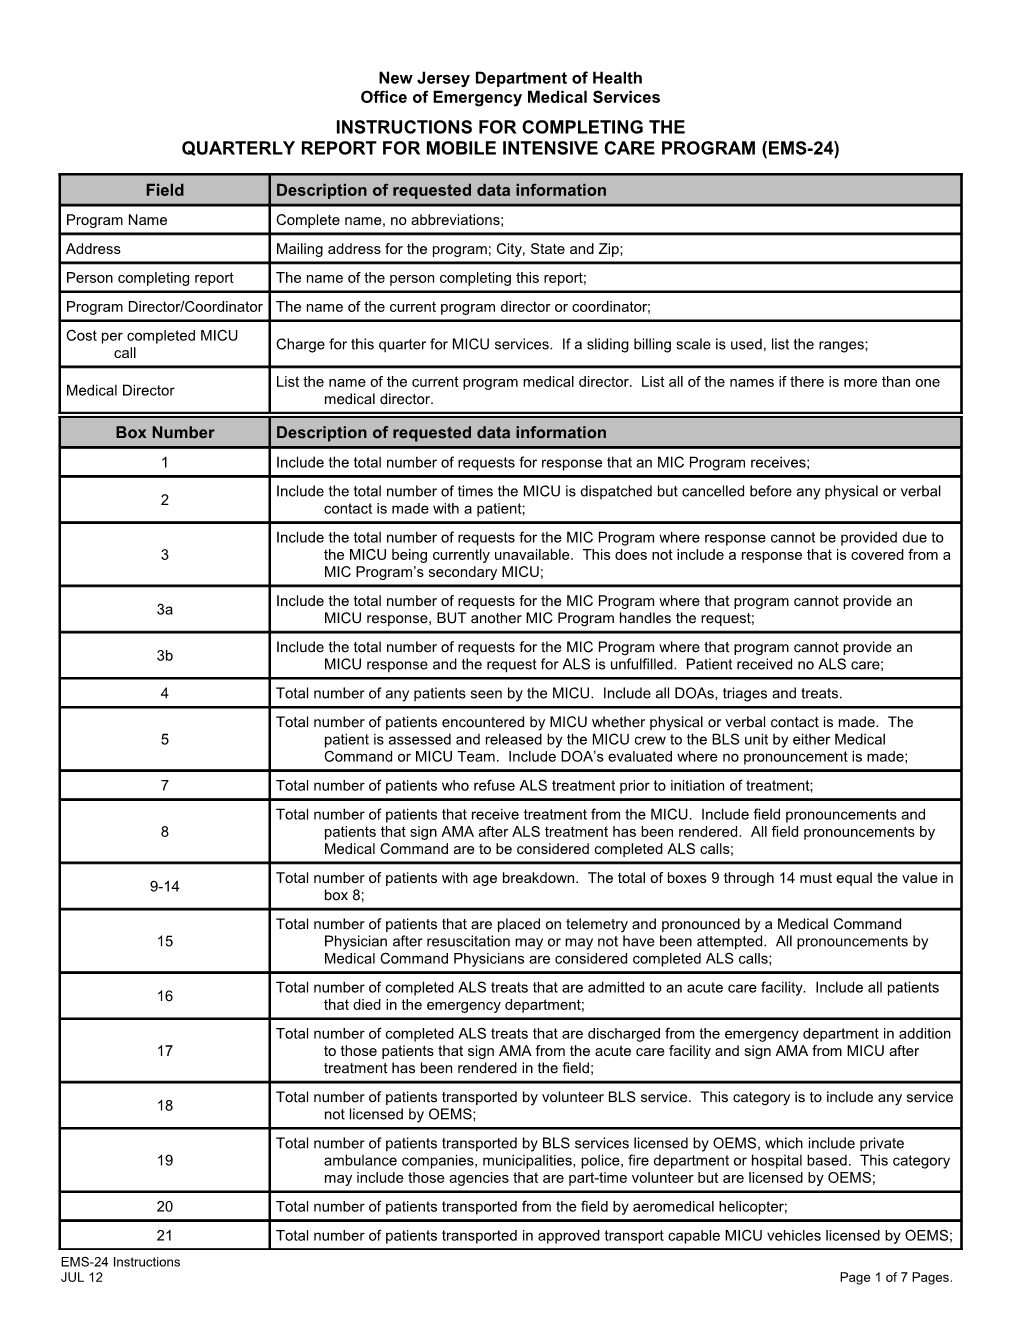 Instructions for EMS-24, MICU Quarterly Report